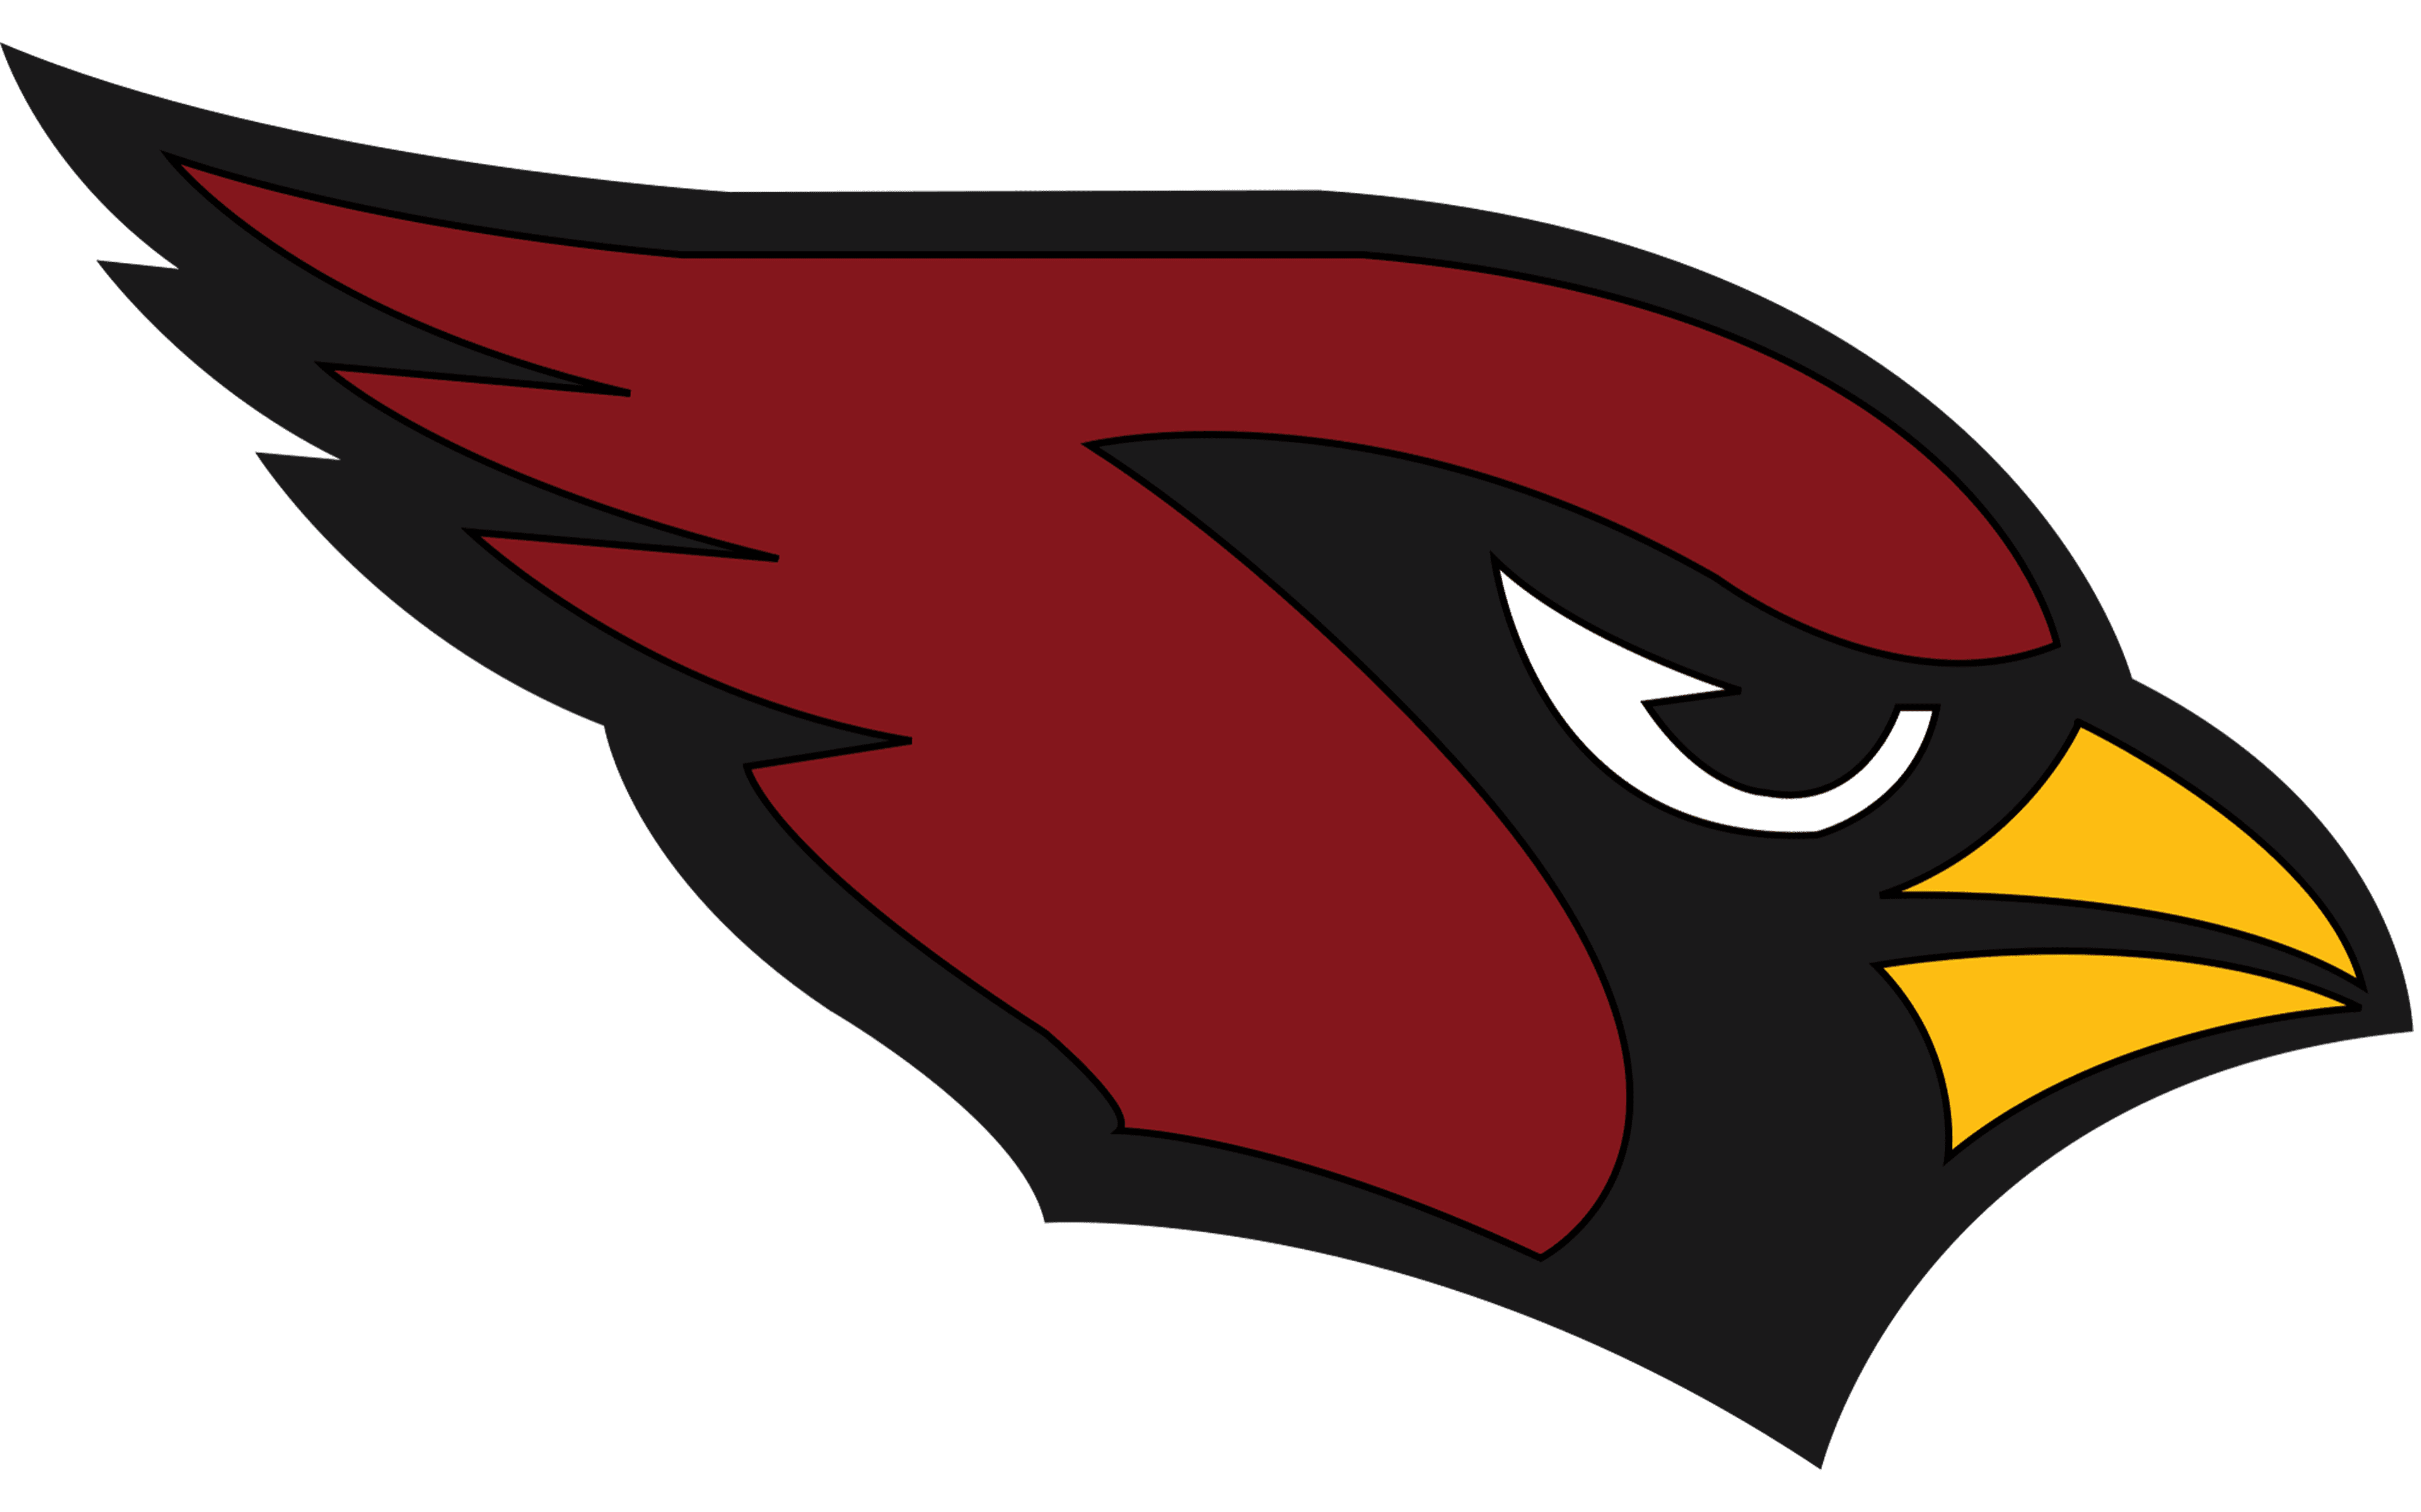 Arizona Cardinals 2021 schedule